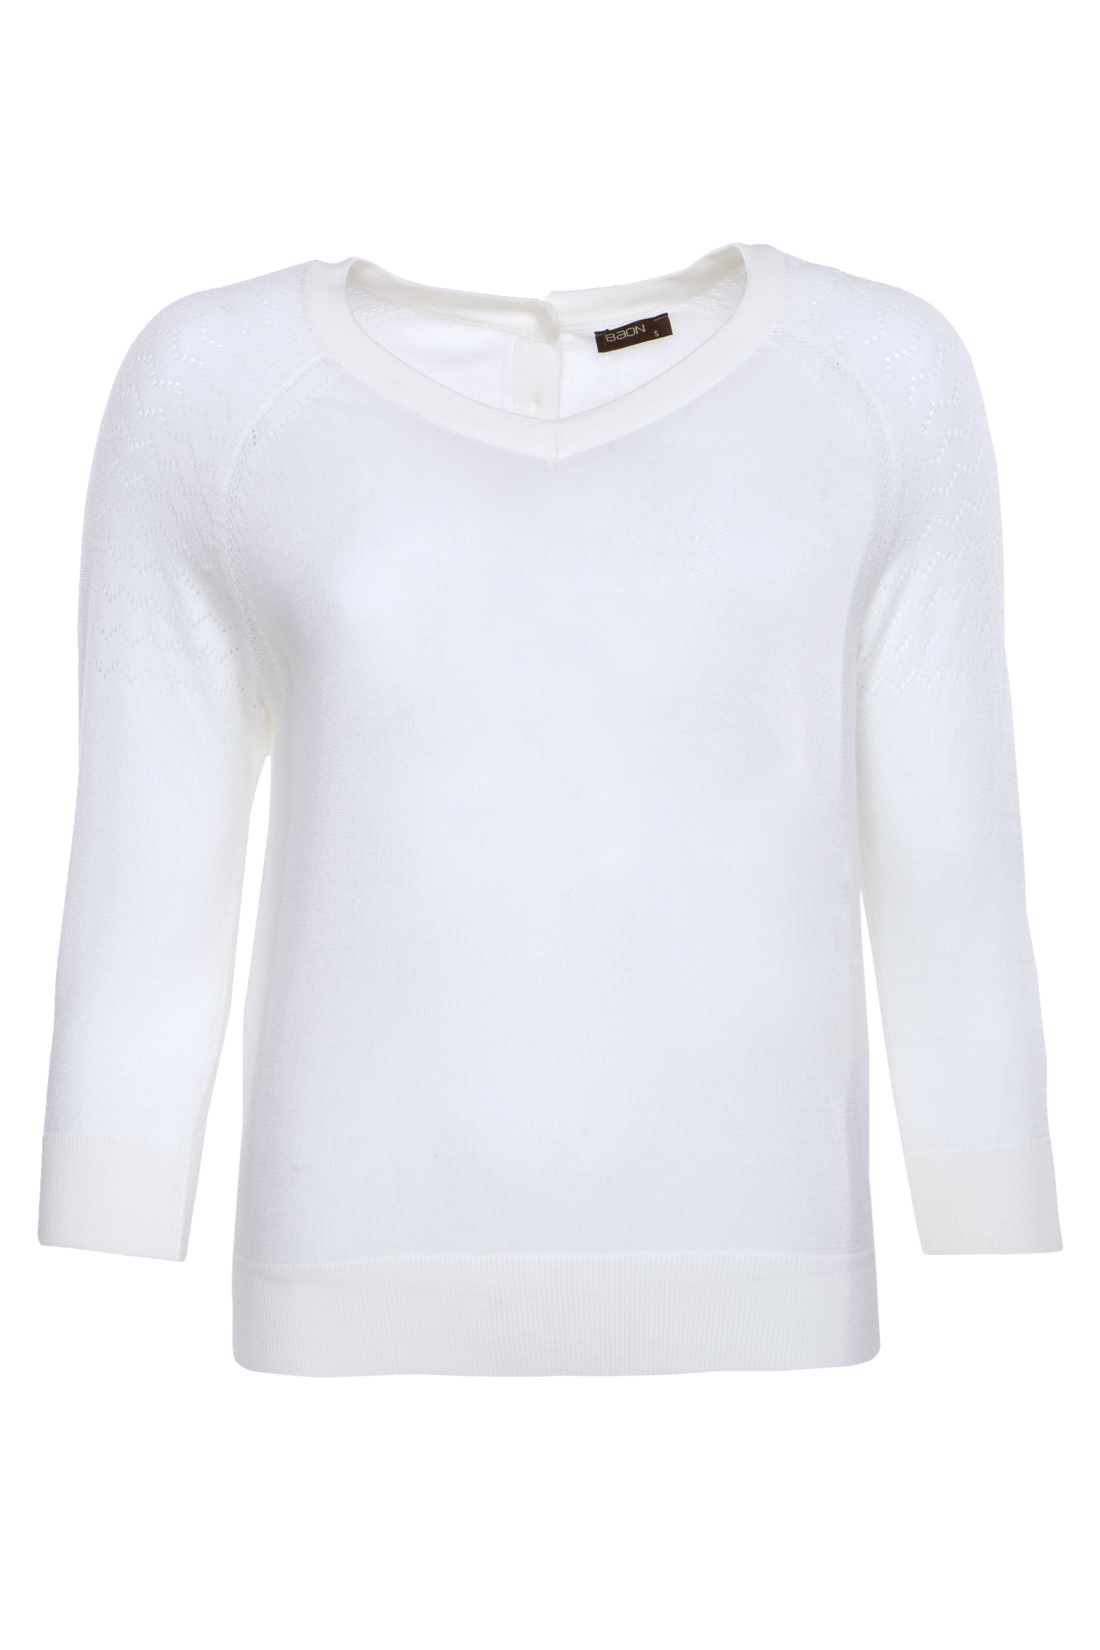 Пуловер с ажурными рукавами (арт. baon B137007), размер XS, цвет белый Пуловер с ажурными рукавами (арт. baon B137007) - фото 4